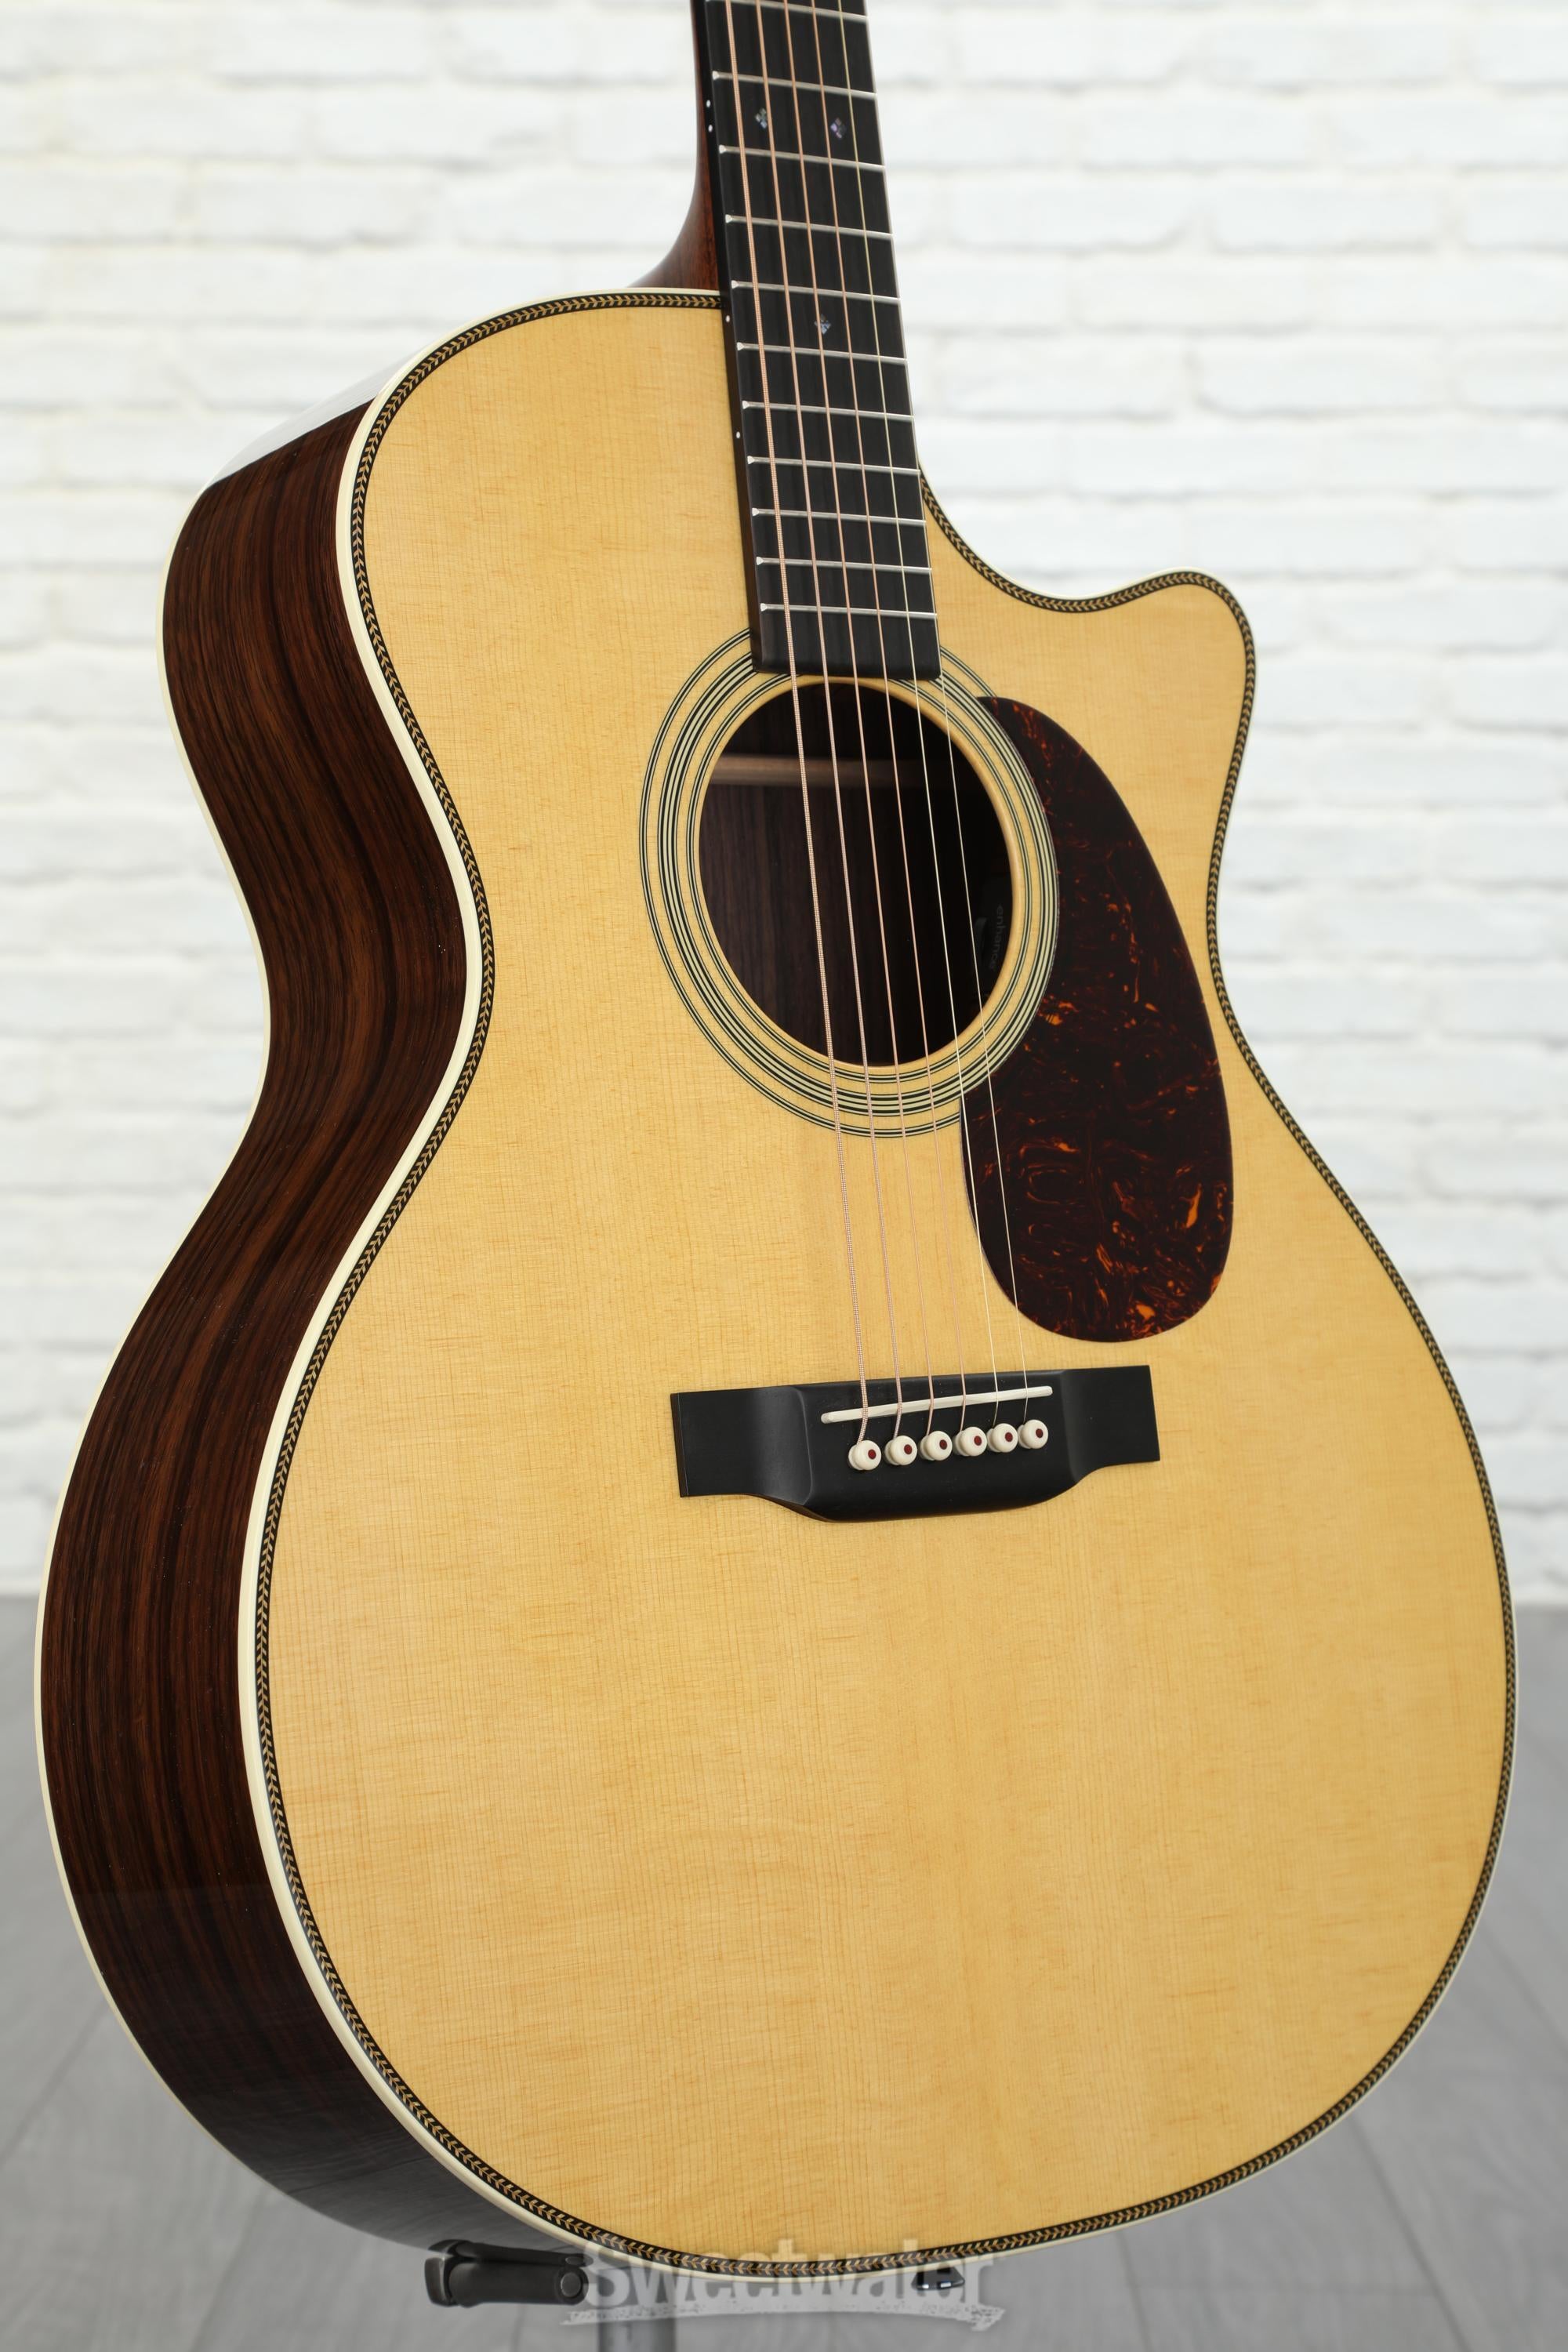 Martin GPC-28E Acoustic Guitar with Fishman Electronics - Natural